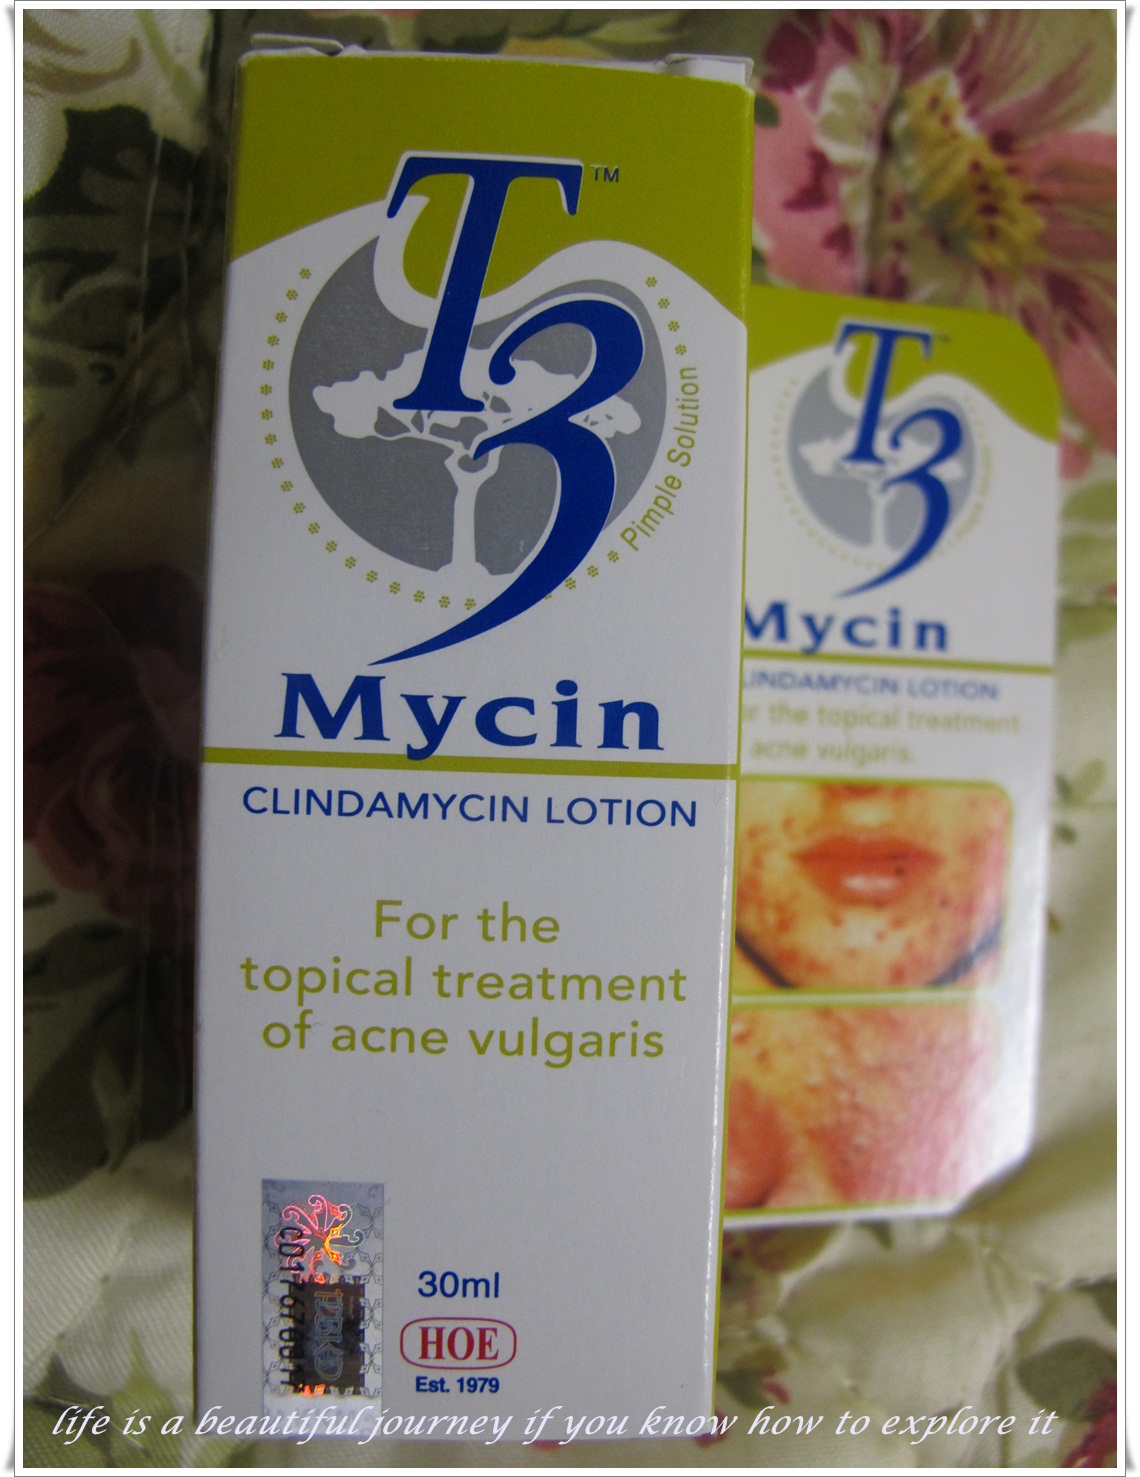 Life is great: T3 Mycin Clindamycin Lotion